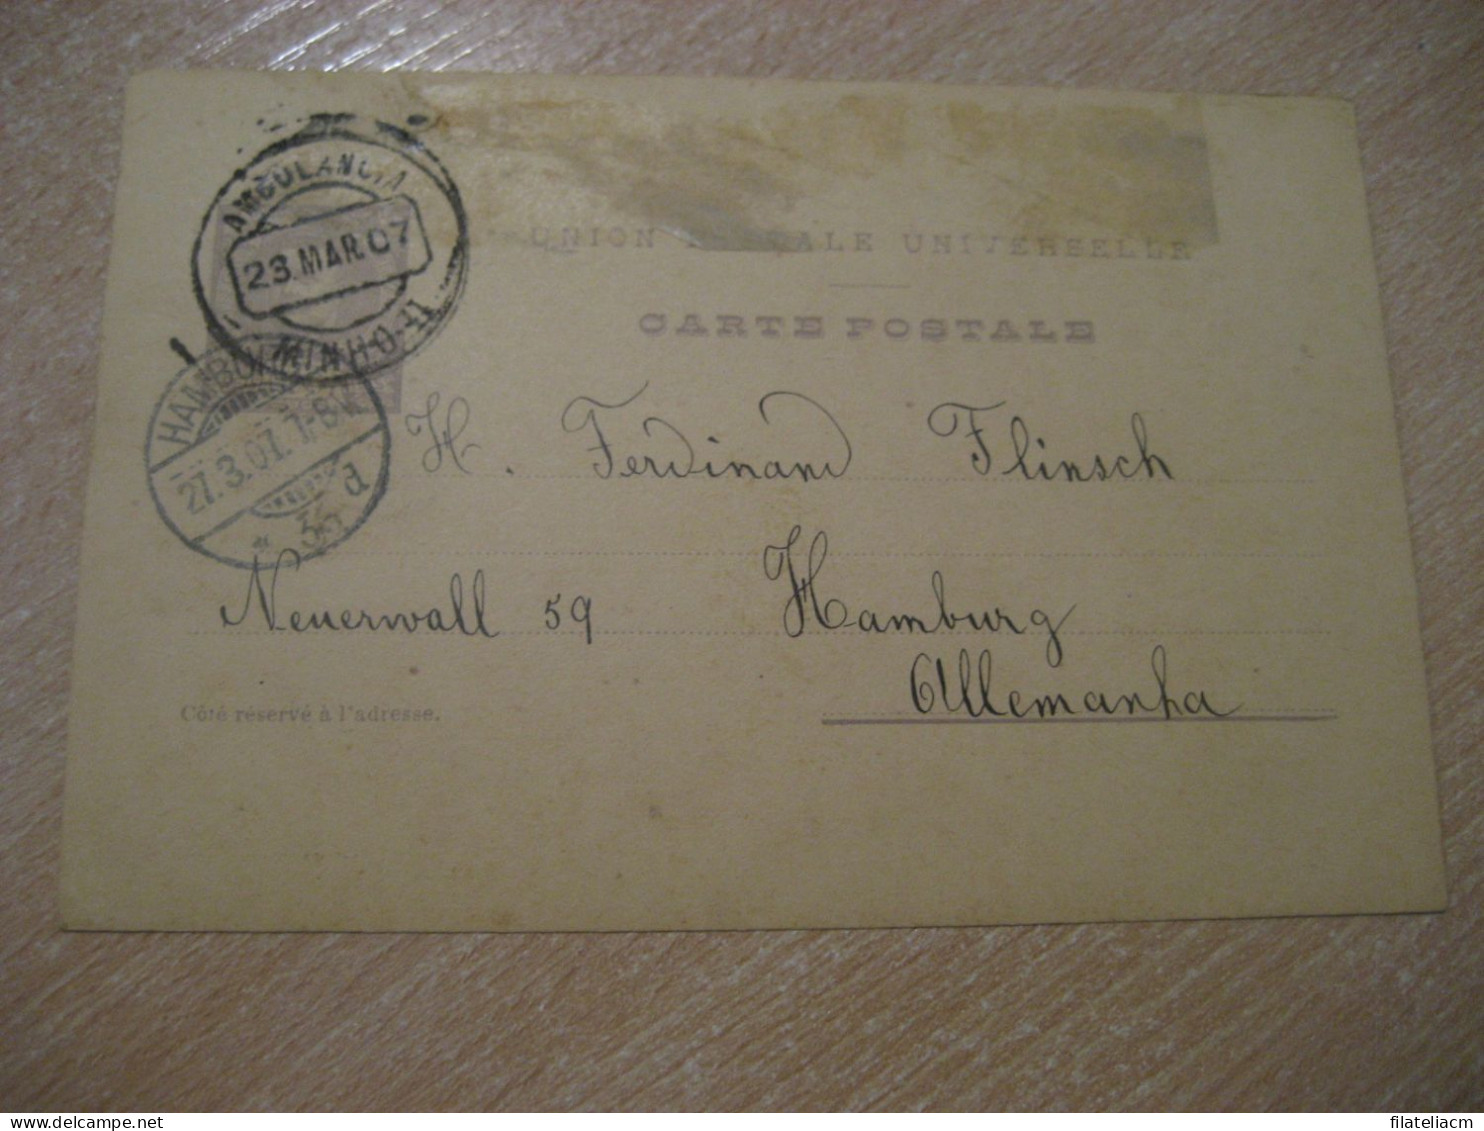 AMBULANCIA MINHO II Braga Porto 1907 To Hamburg Germany Cancel UPU Faults Carte Postale Postal Stationery Card PORTUGAL - Briefe U. Dokumente